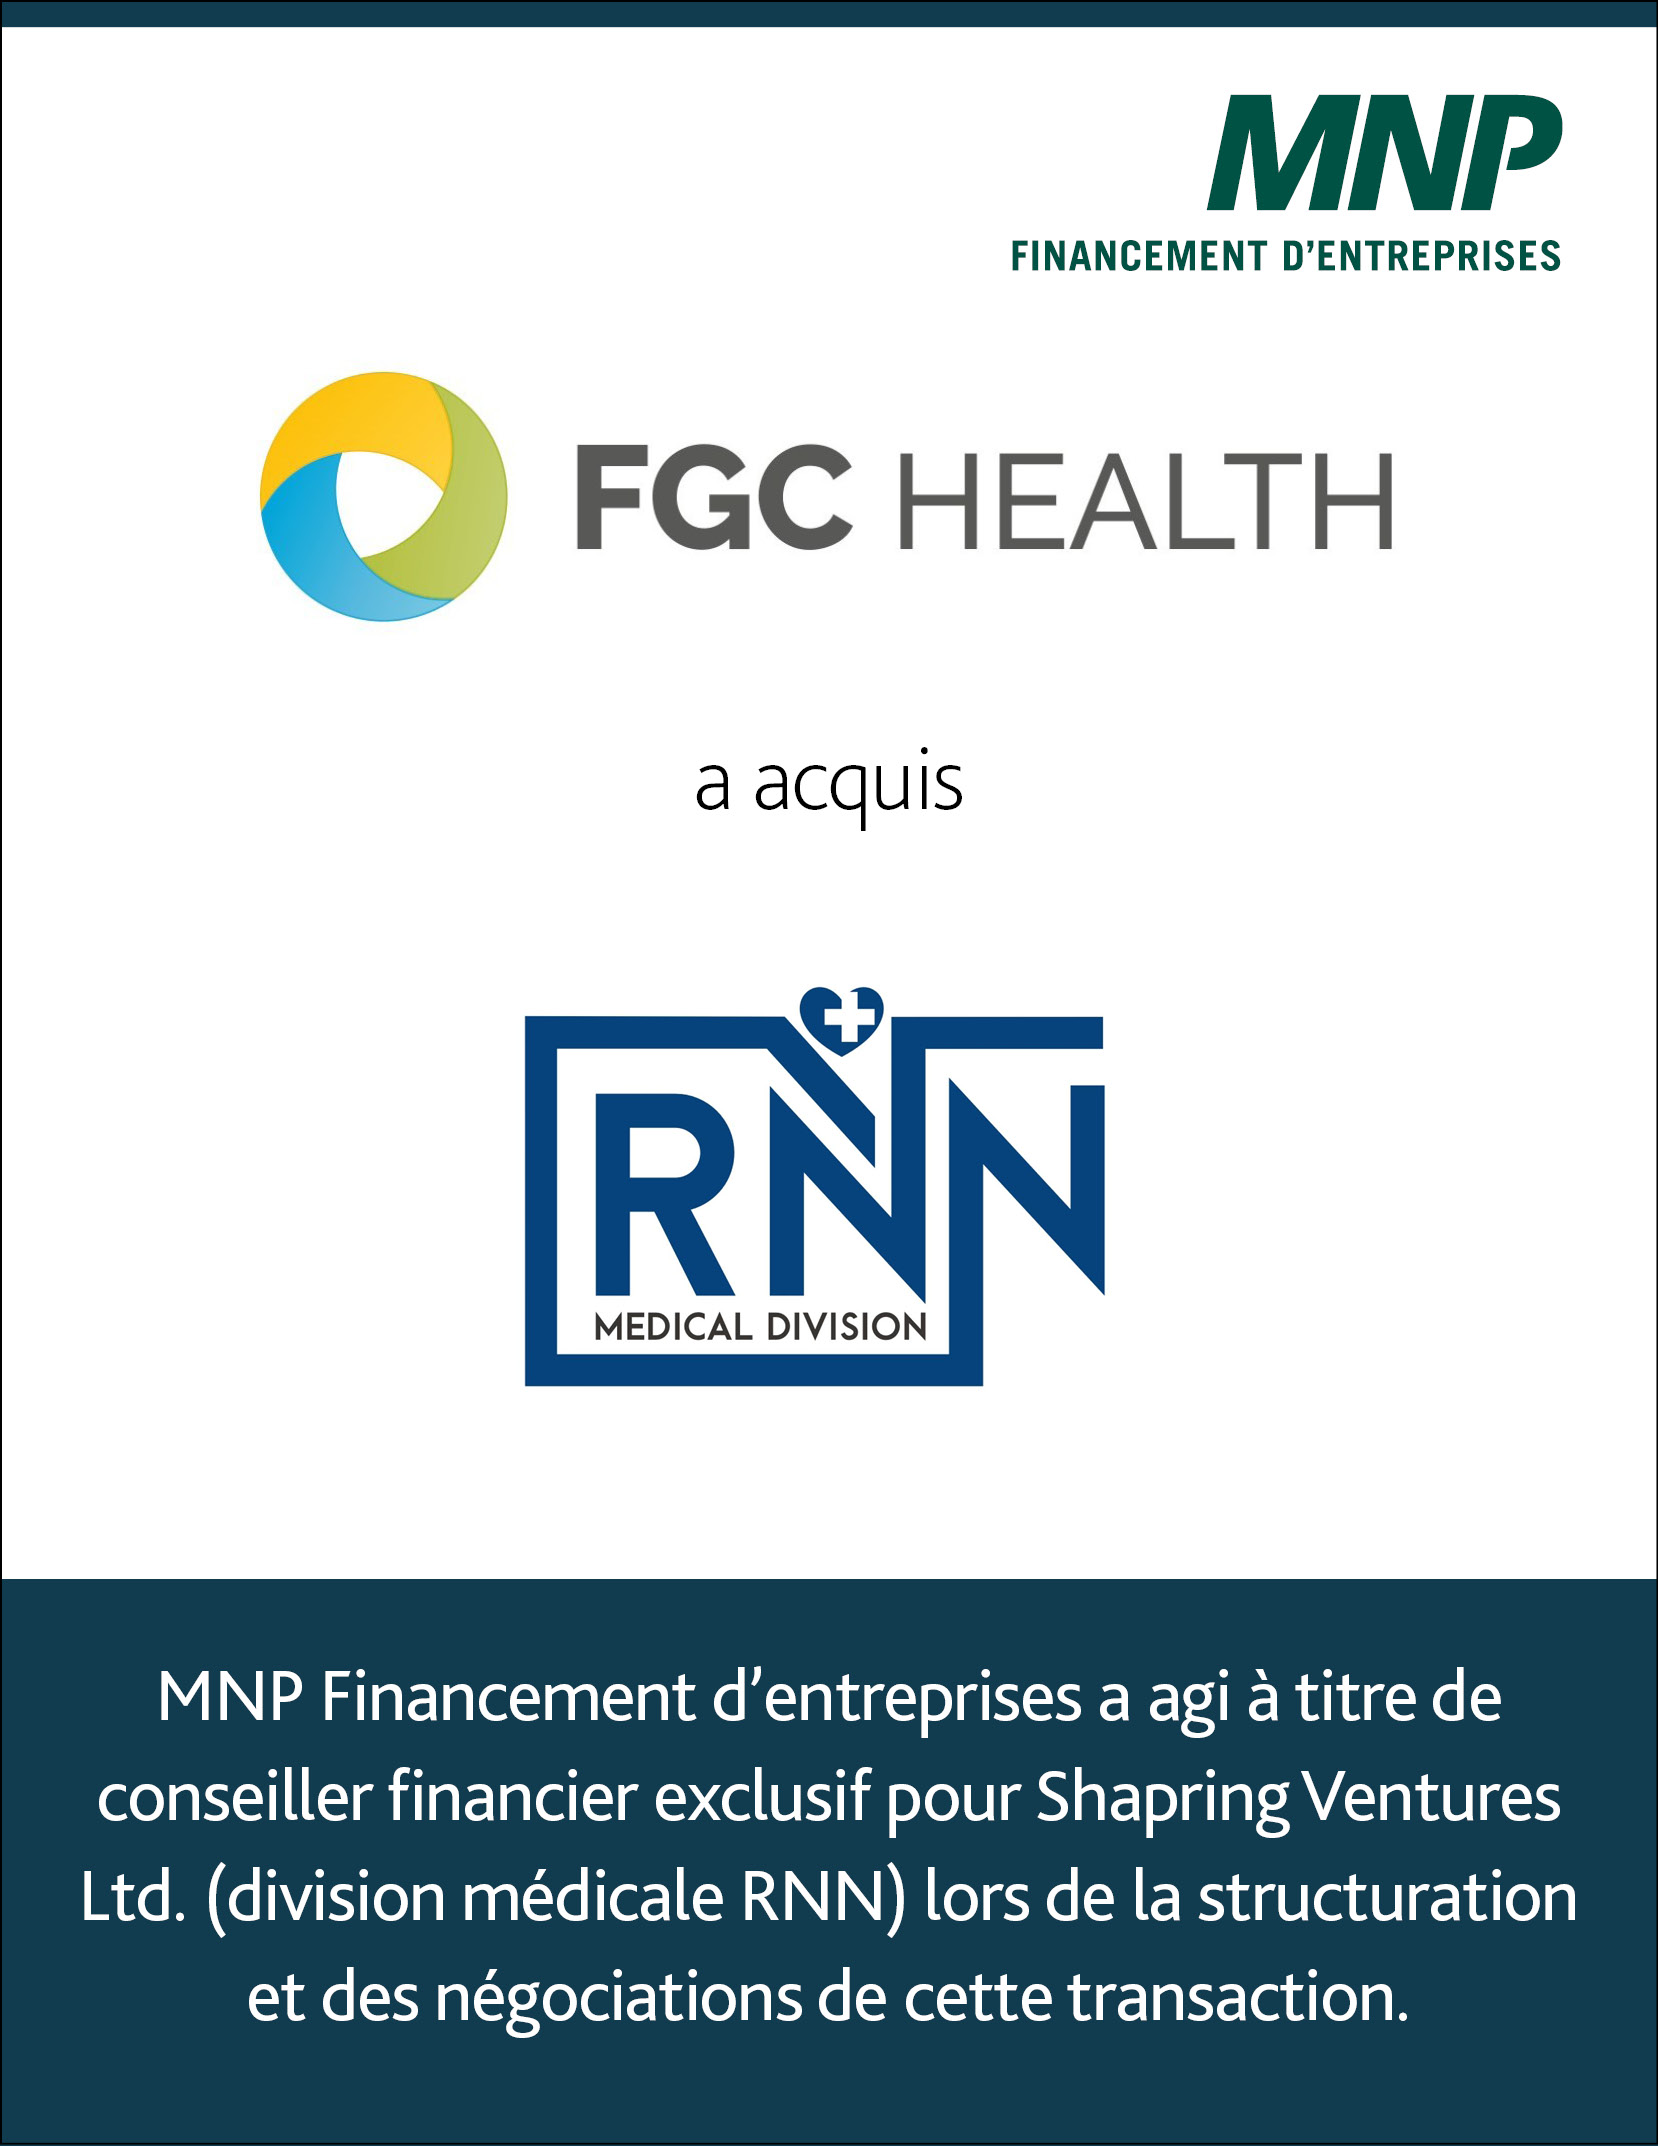 FGC & RNN logos